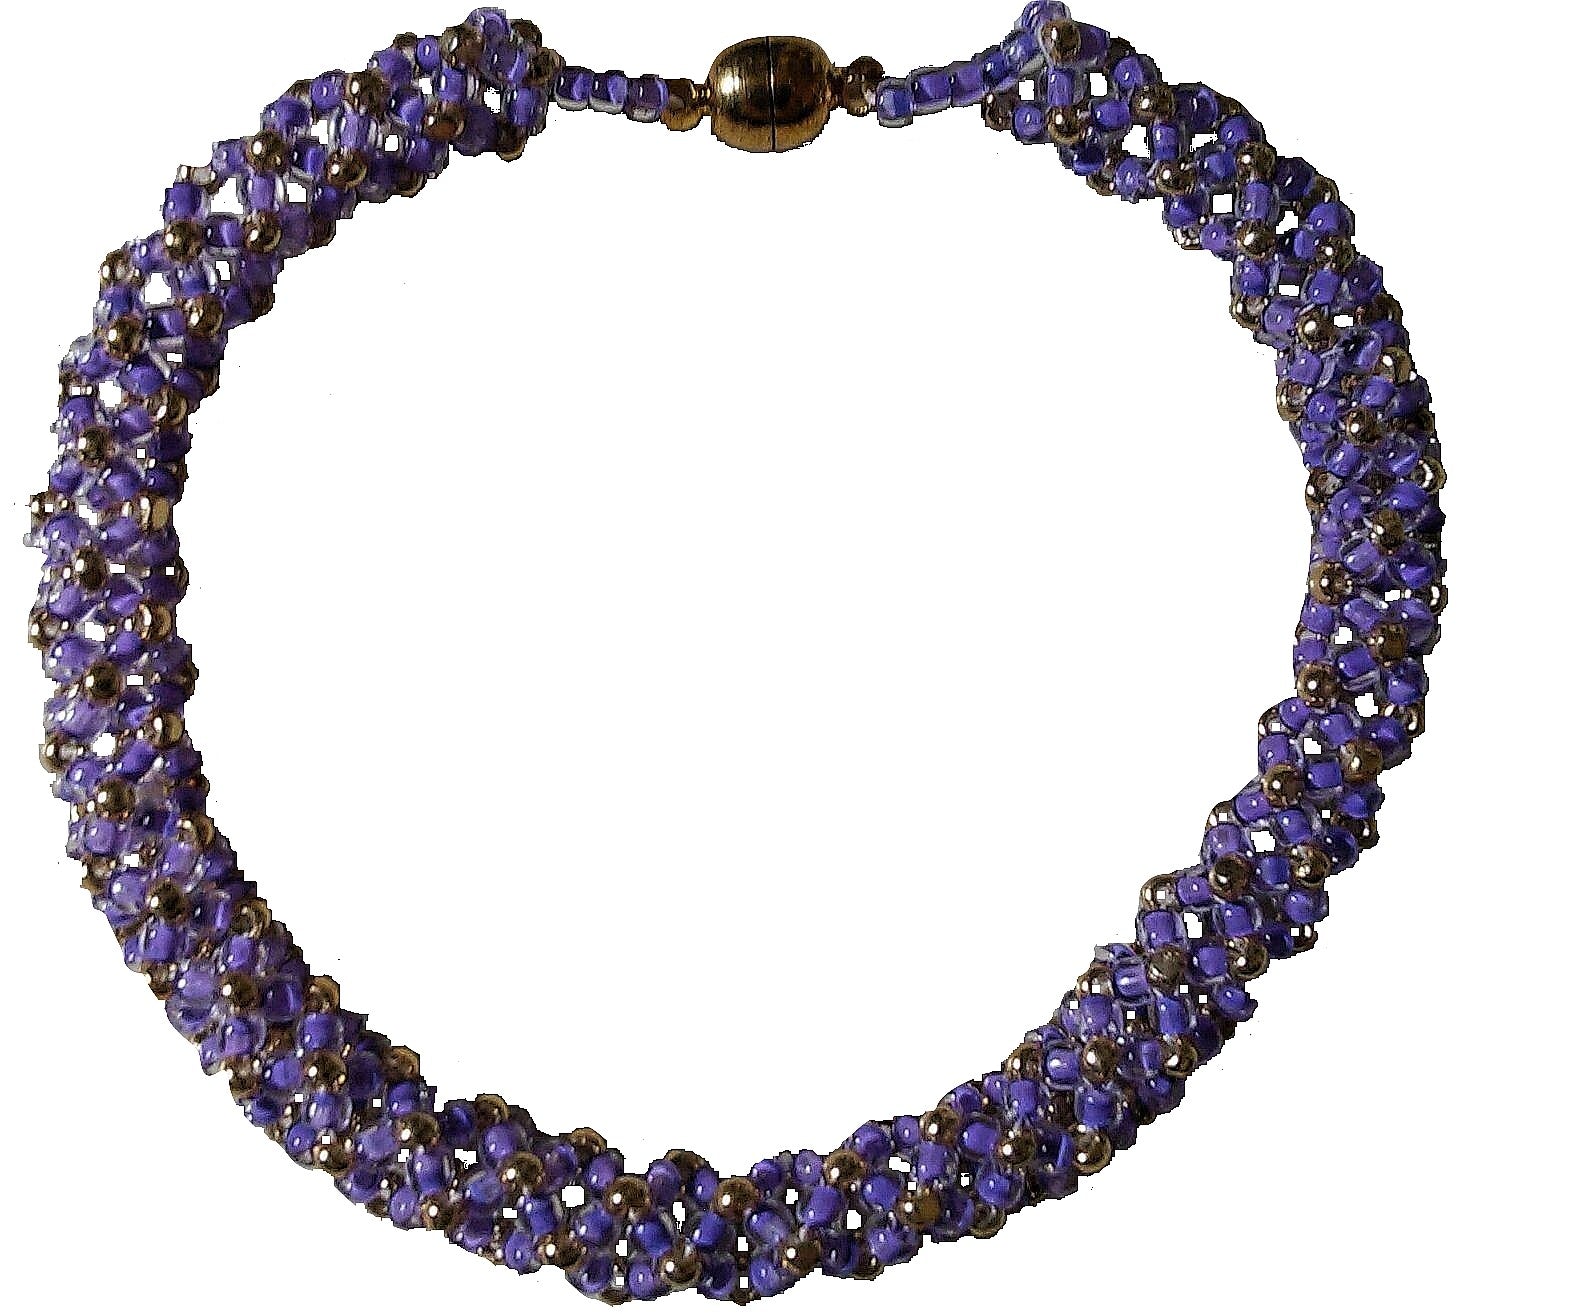 Chenille-y Lace Bracelet Colorway One